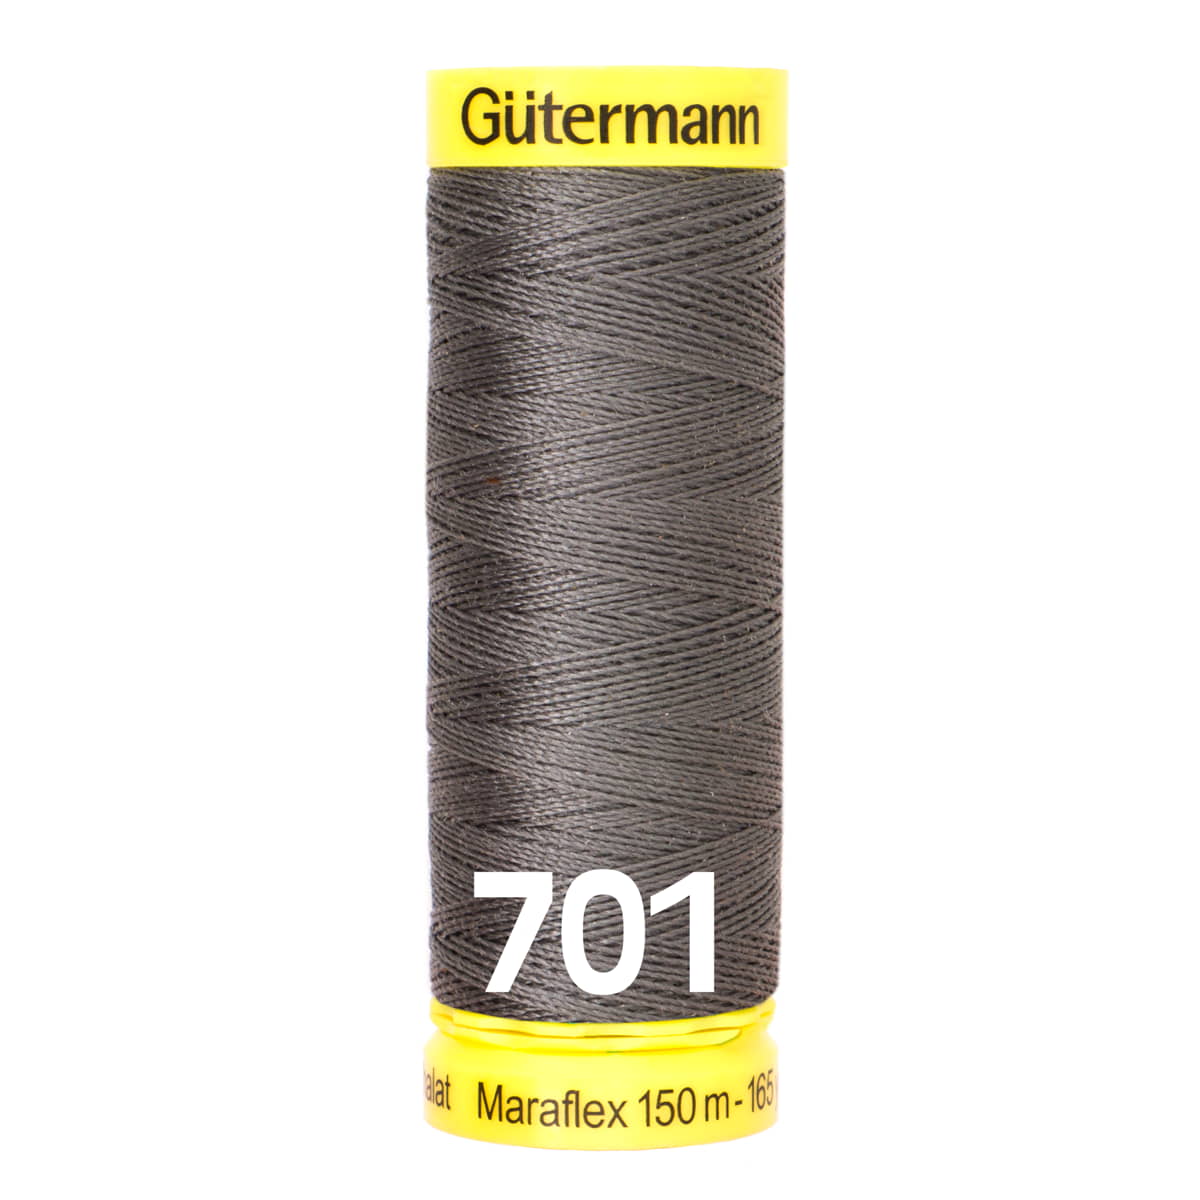 Gütermann MaraFlex 150m - 701 donker grijs GUTERMANN-MARAFLEX-150-701 4029394998454 - Fourniturenkraam.nl